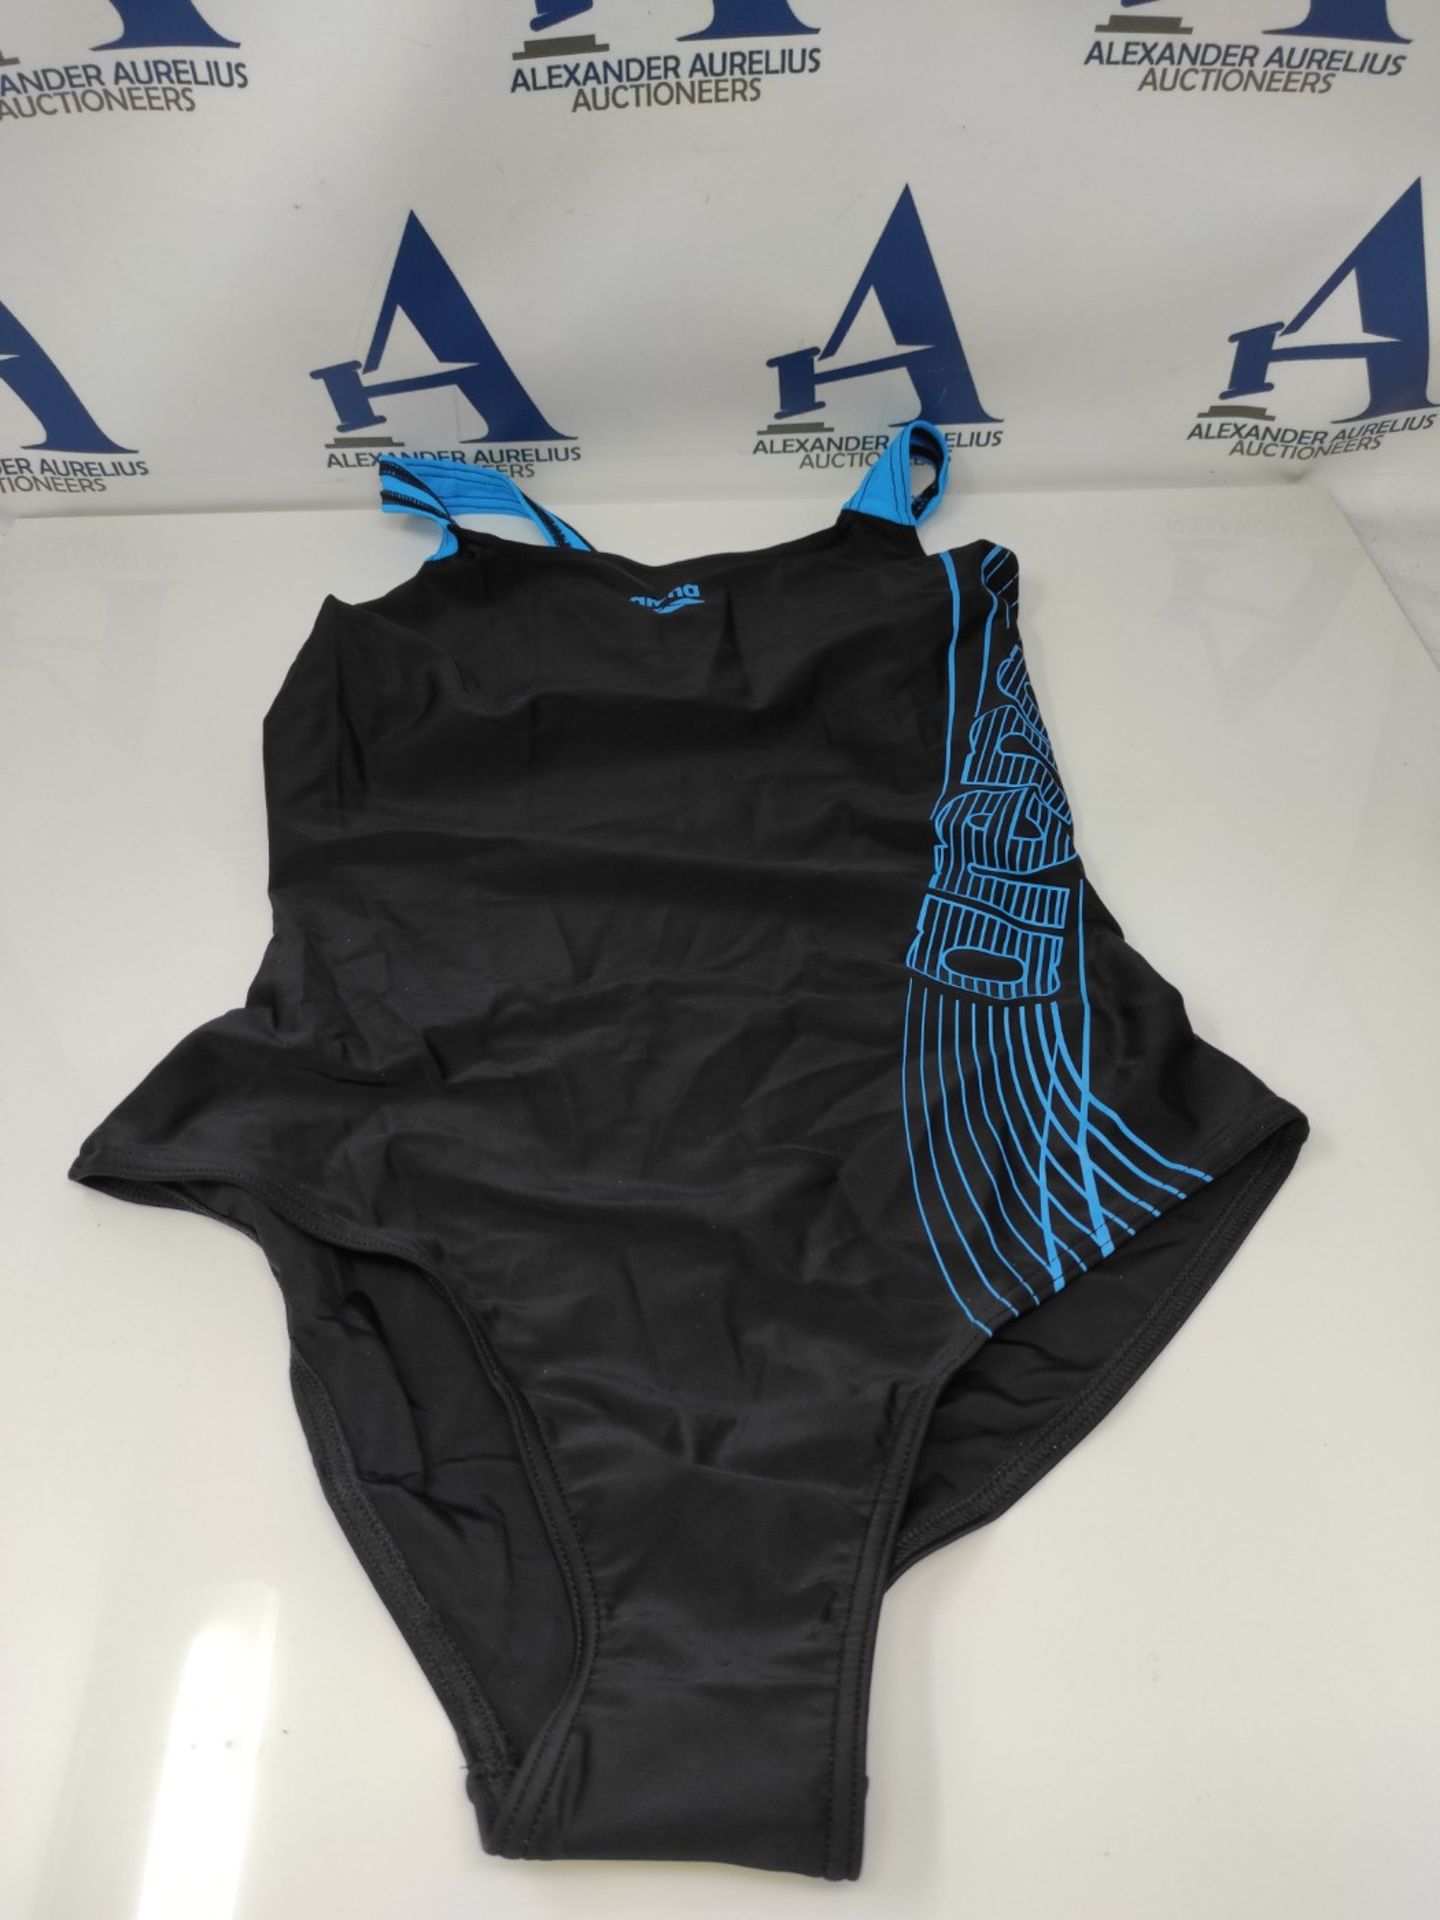 ARENA Damen Women's Arena Dreamy Pro Back One Piece Swimsuit, Black-turquoise, 38 EU - Image 2 of 3